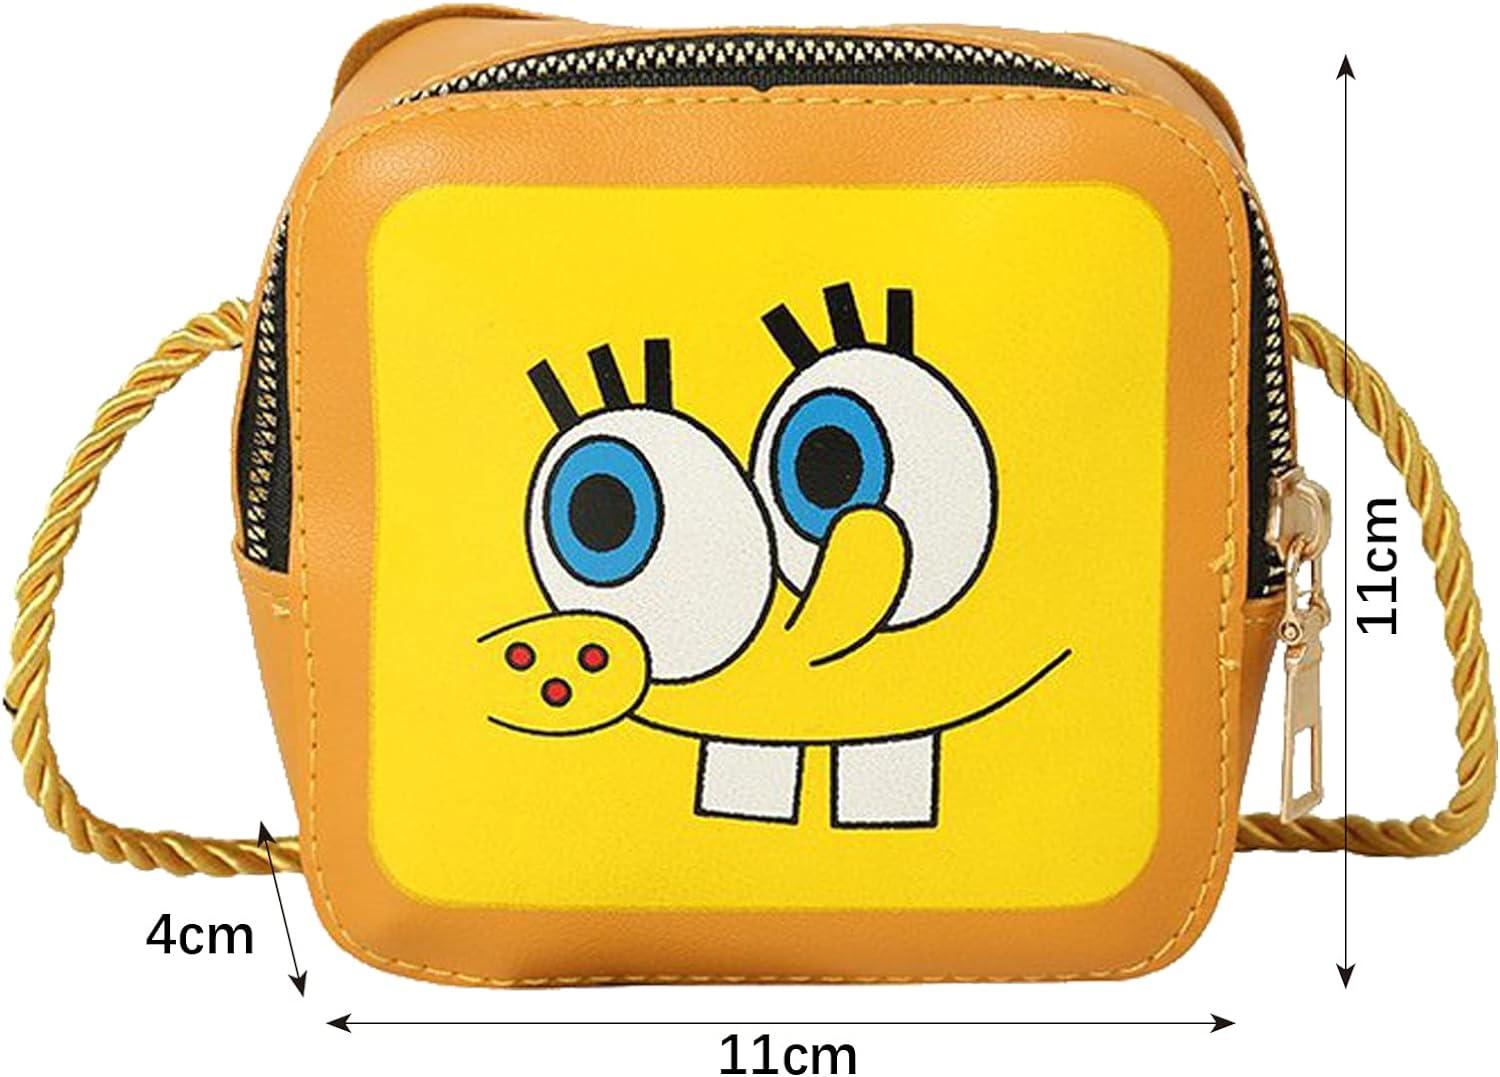 SpongeBob with a purse